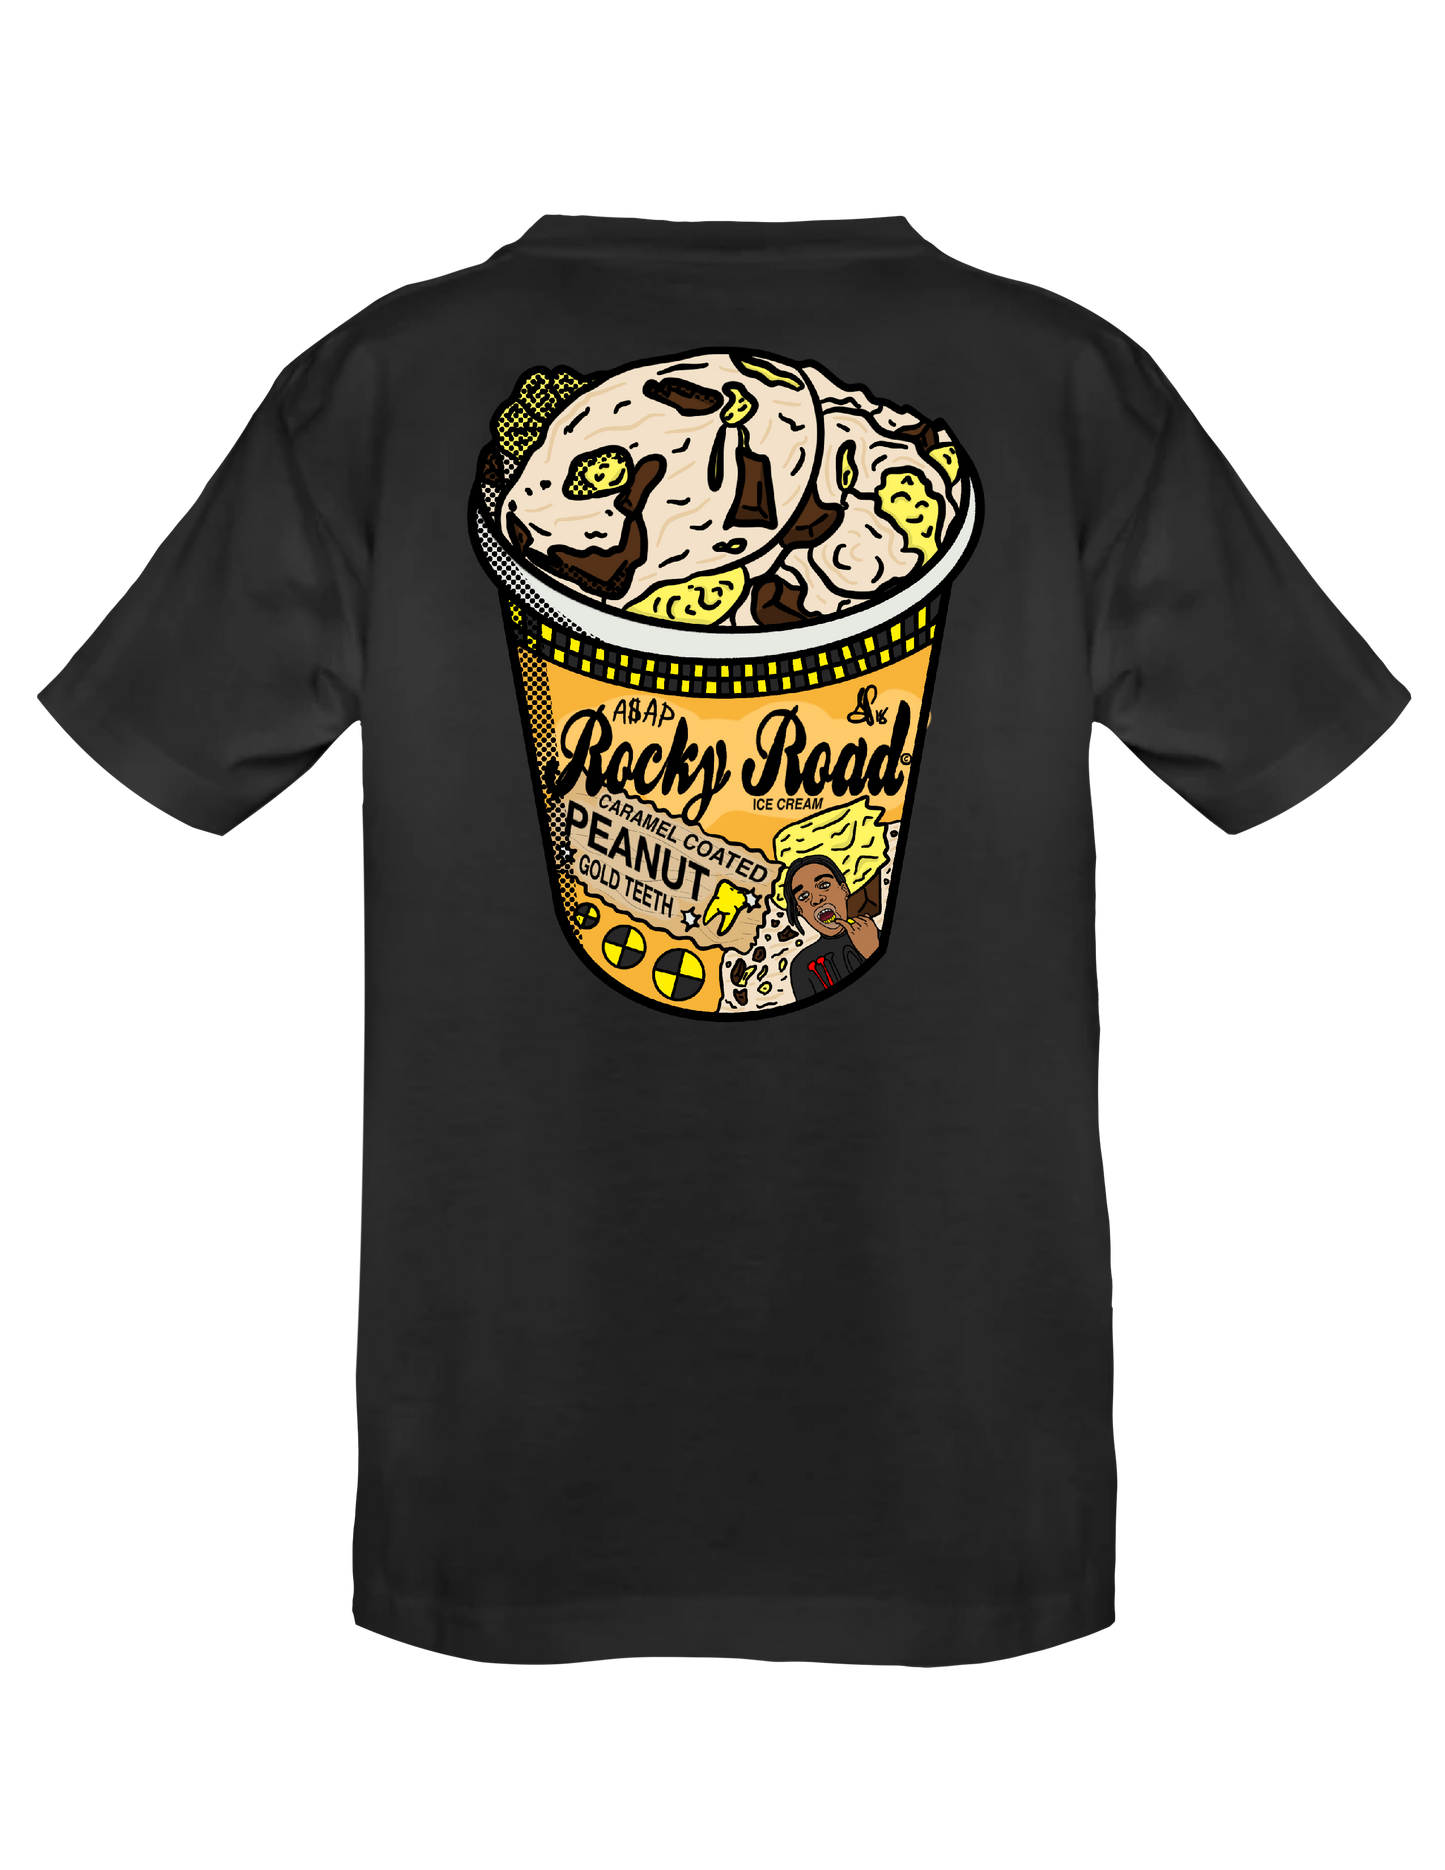 ASAP ROCKY ROAD ICE CREAM - T-Shirt by BOYSDONTDRAW